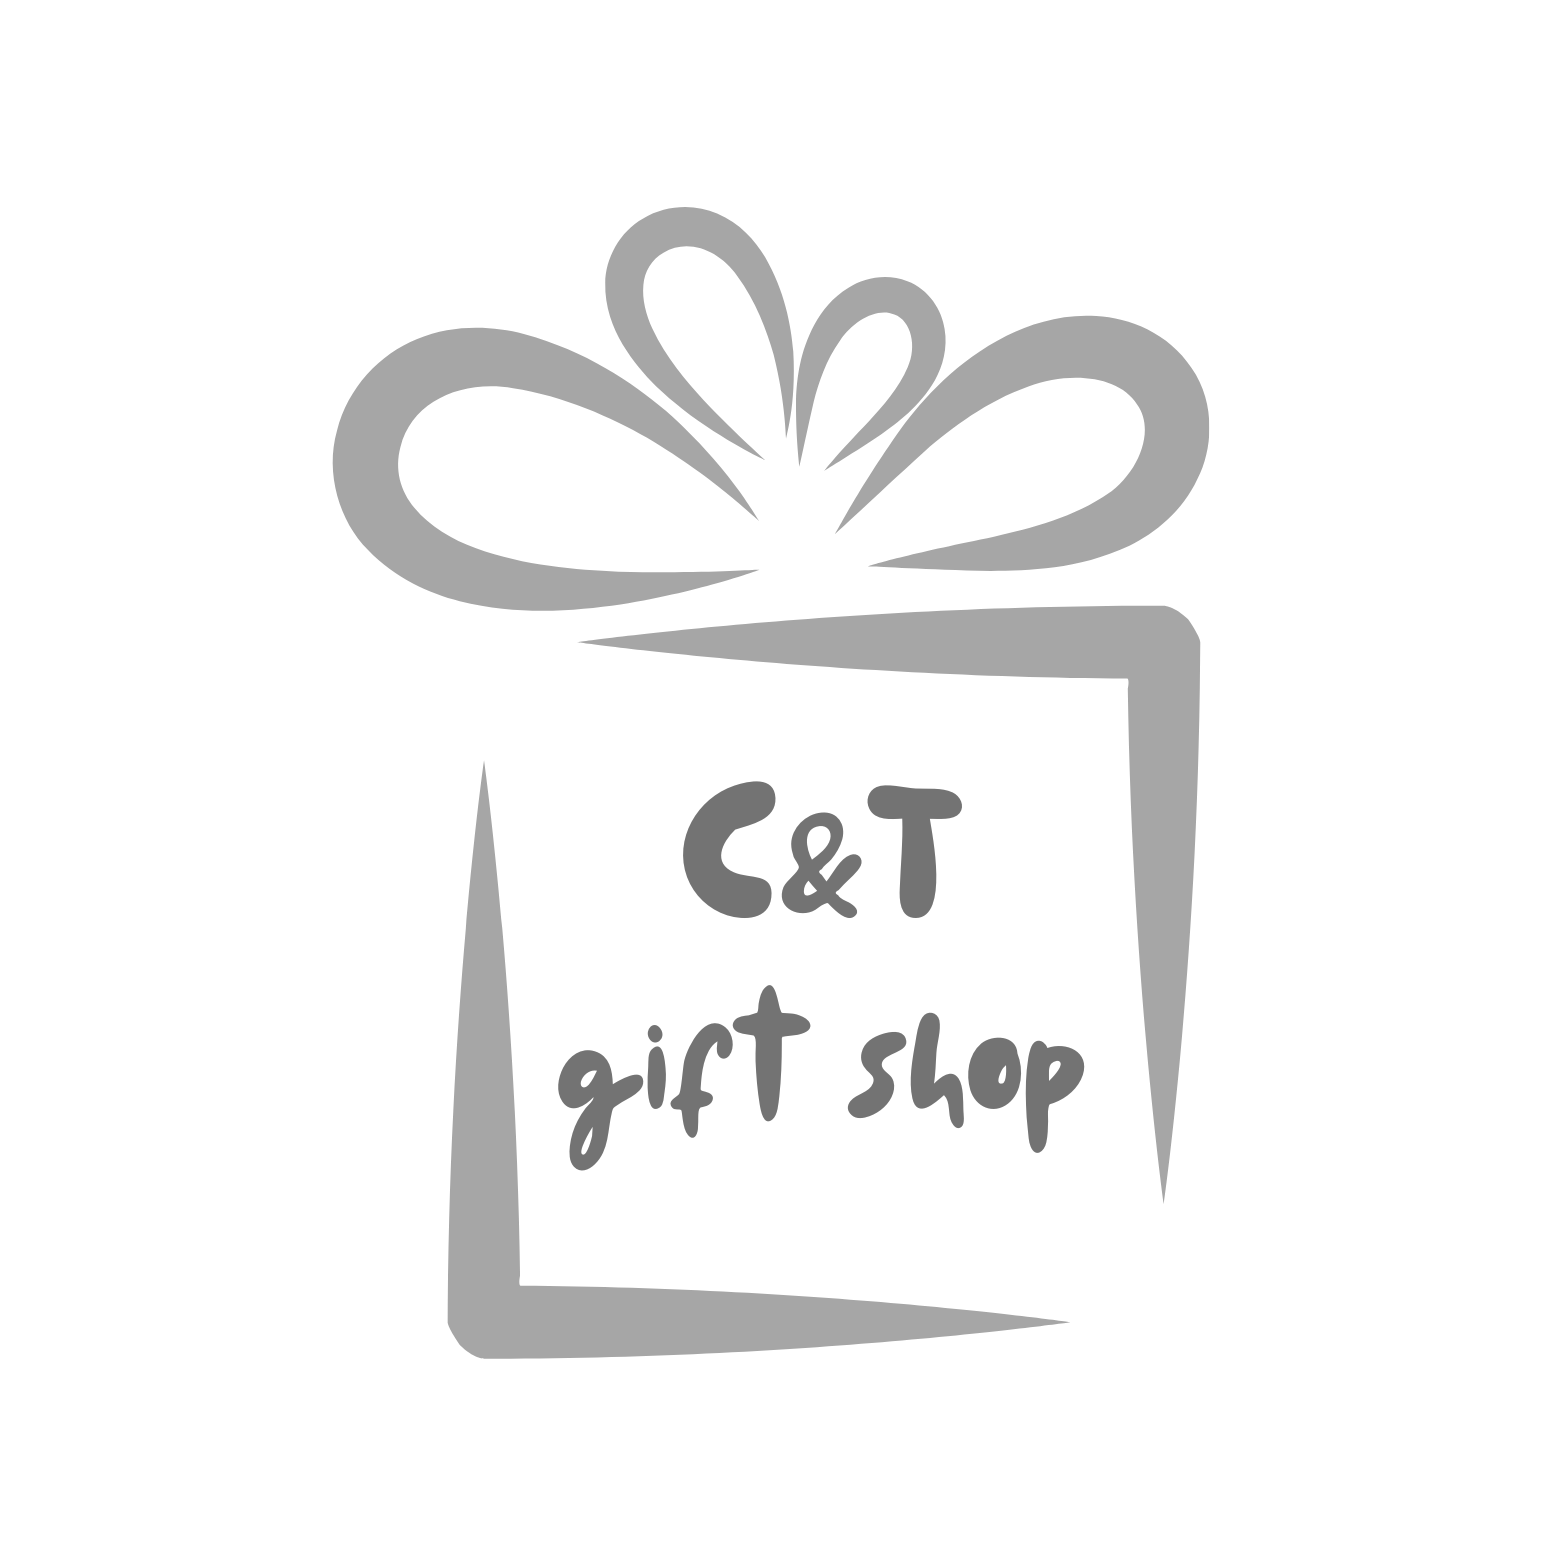 C&T Gift Shop